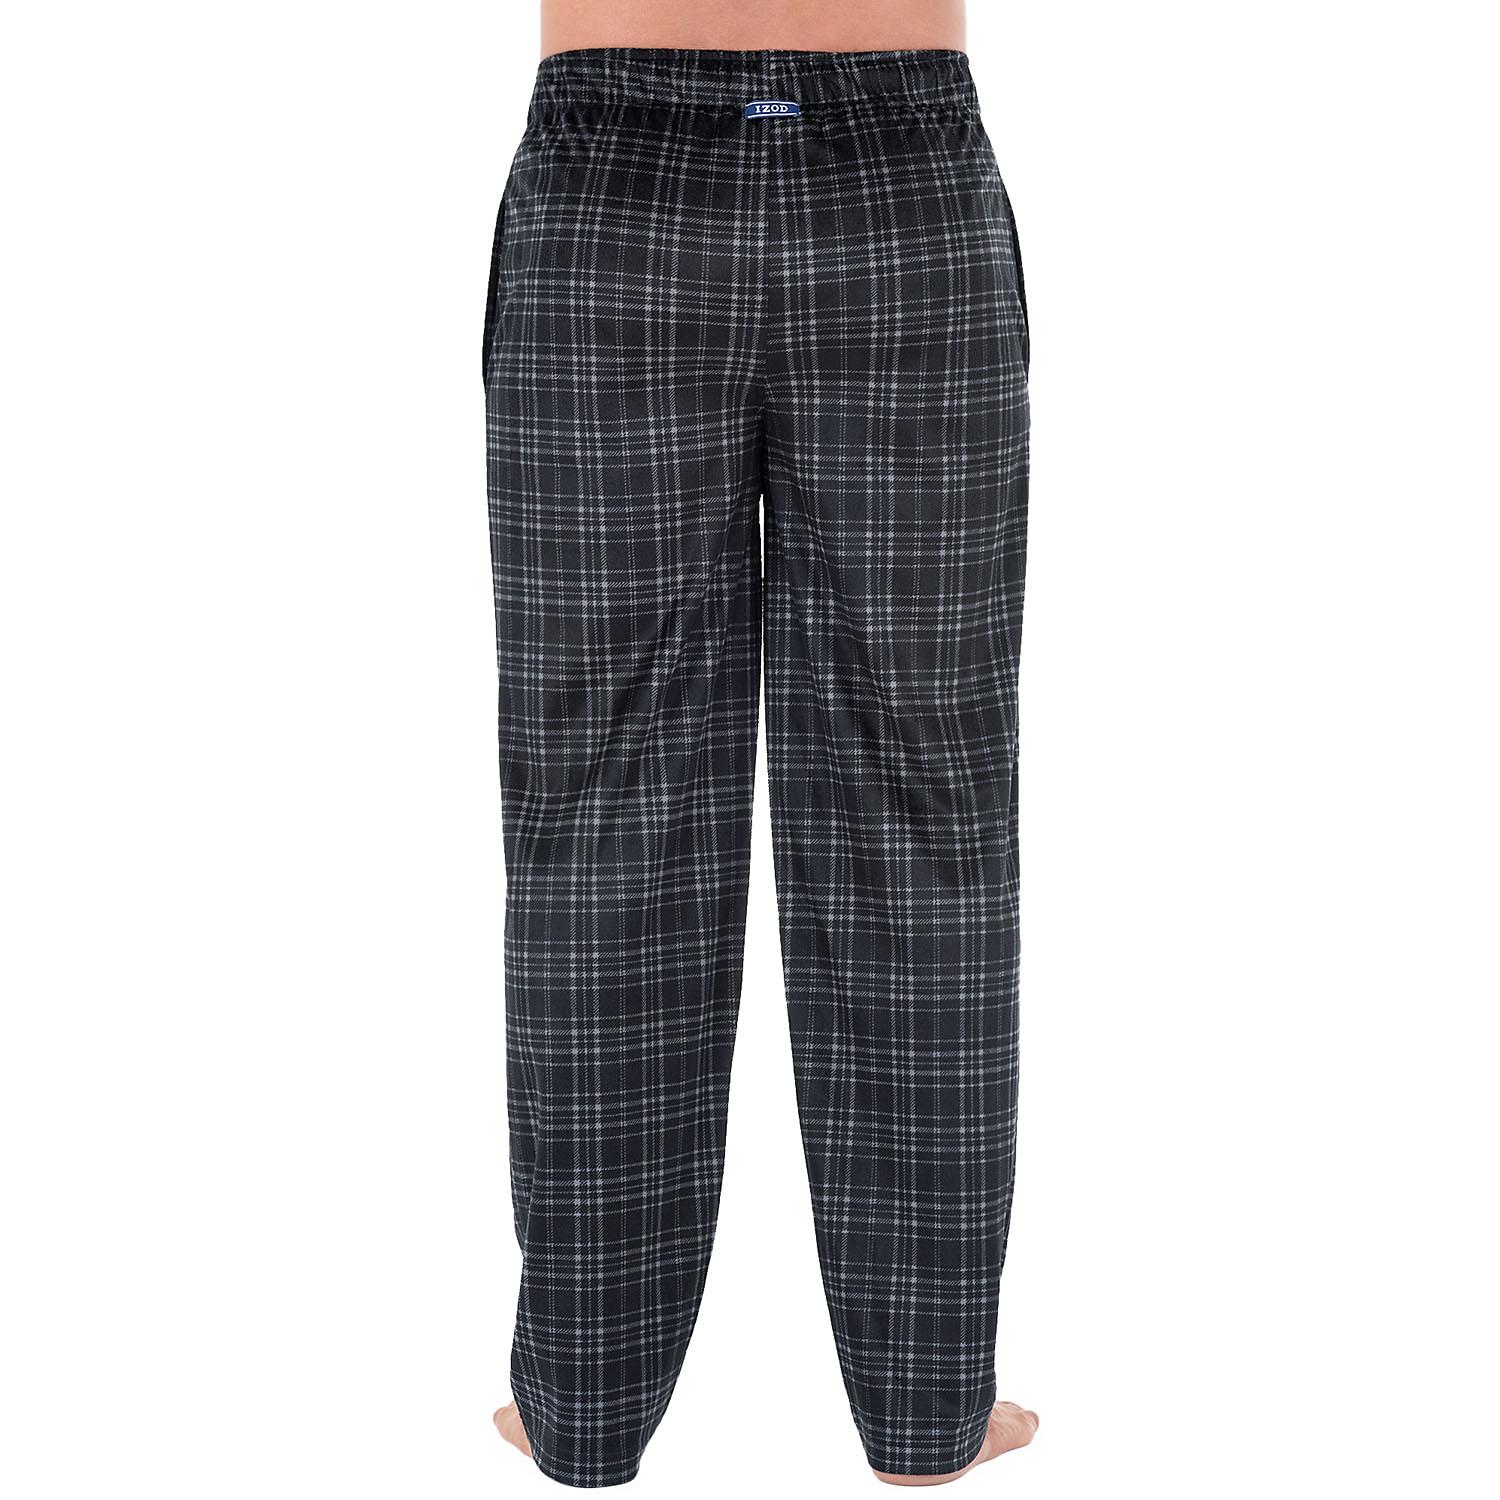 Izod Men's Micro Fleece Pajama Pant in Black, Size Medium - image 3 of 3